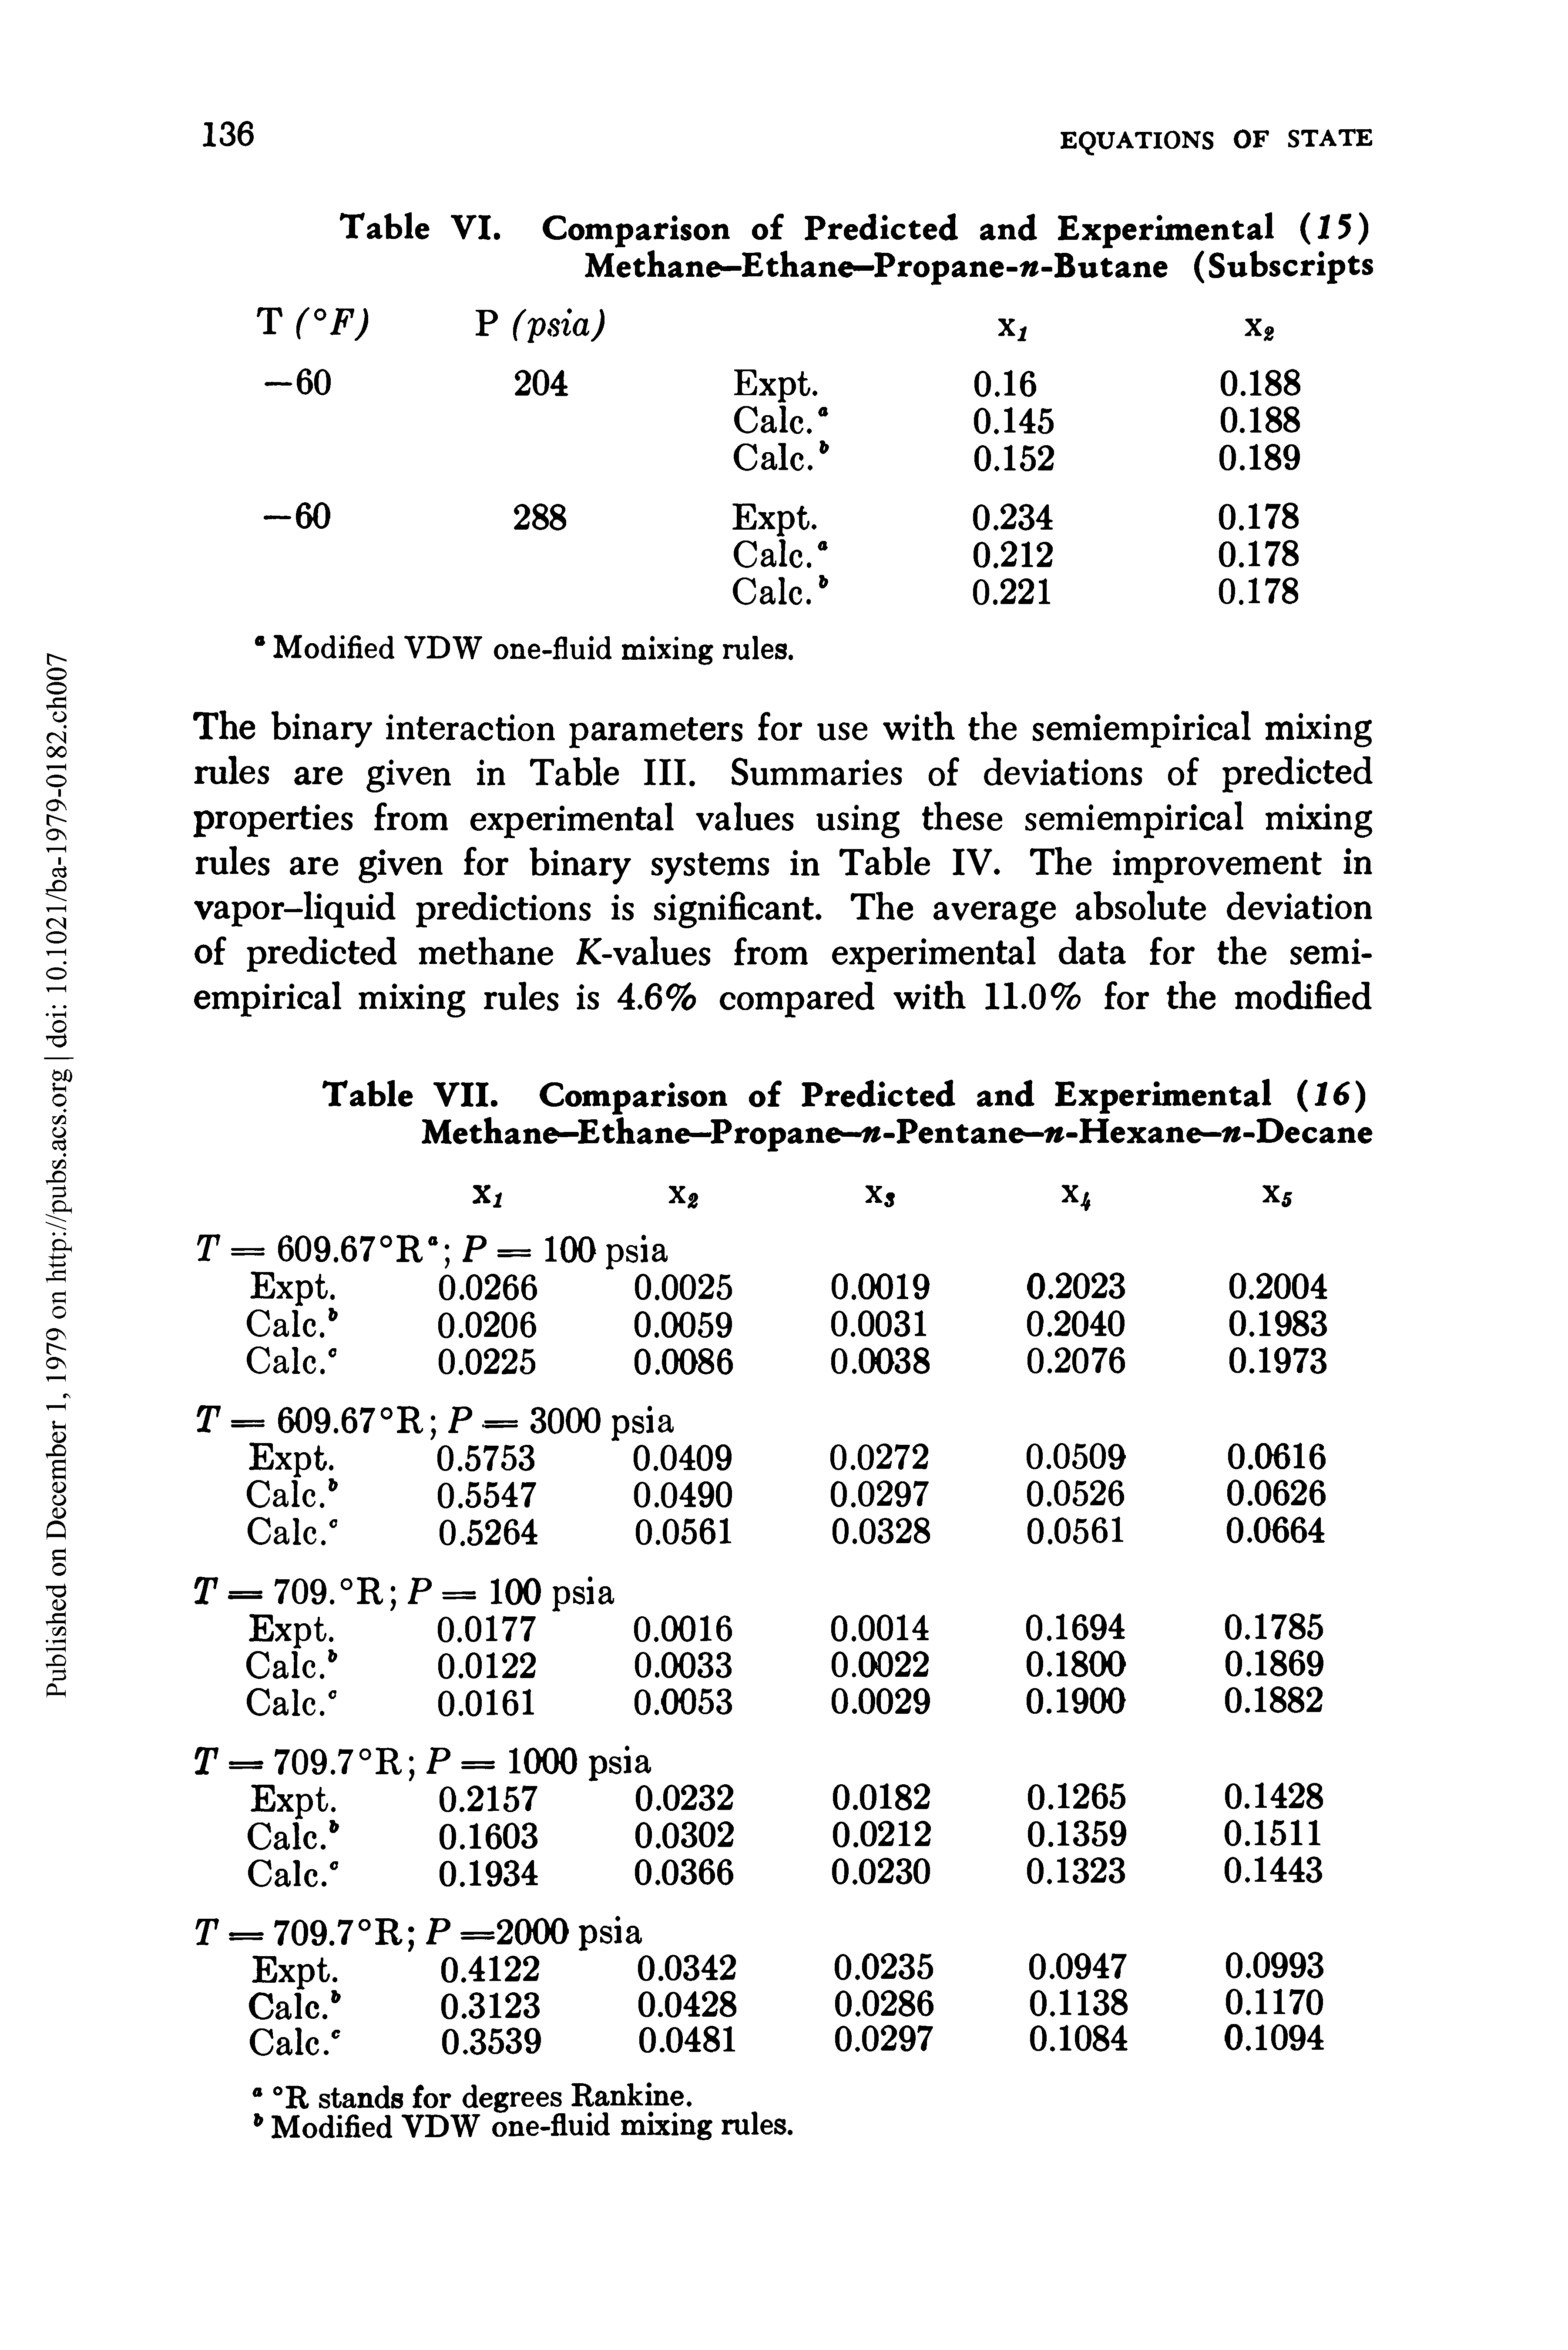 Table VII. Comparison of Predicted and Experimental (16) Methane-Ethane—Propane— -Pentane- -Hexane- f-Decane...